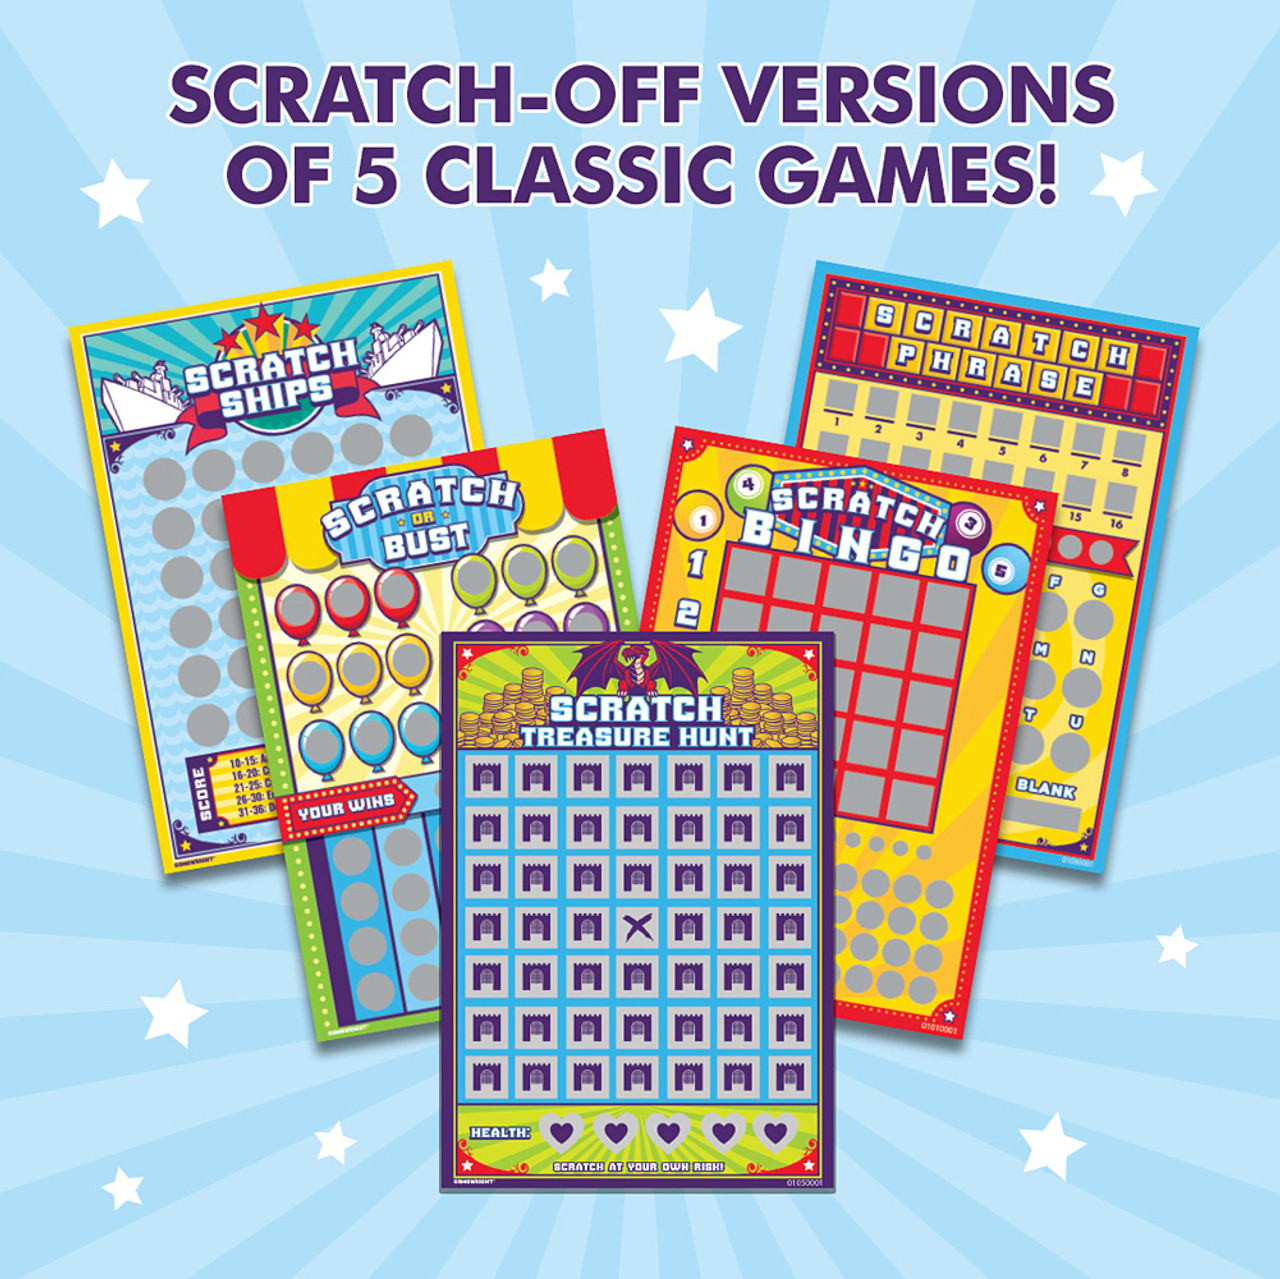 Scratch 'n' Play Classic Games 2